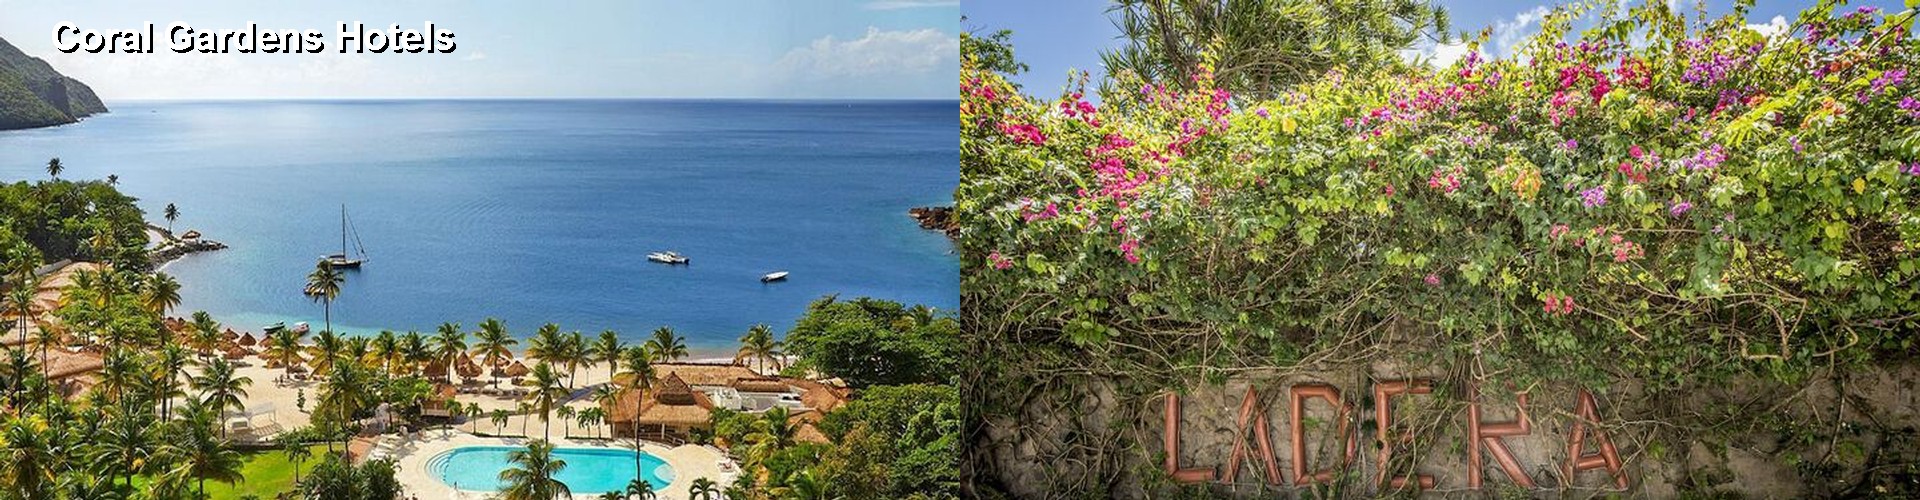 5 Best Hotels near Coral Gardens